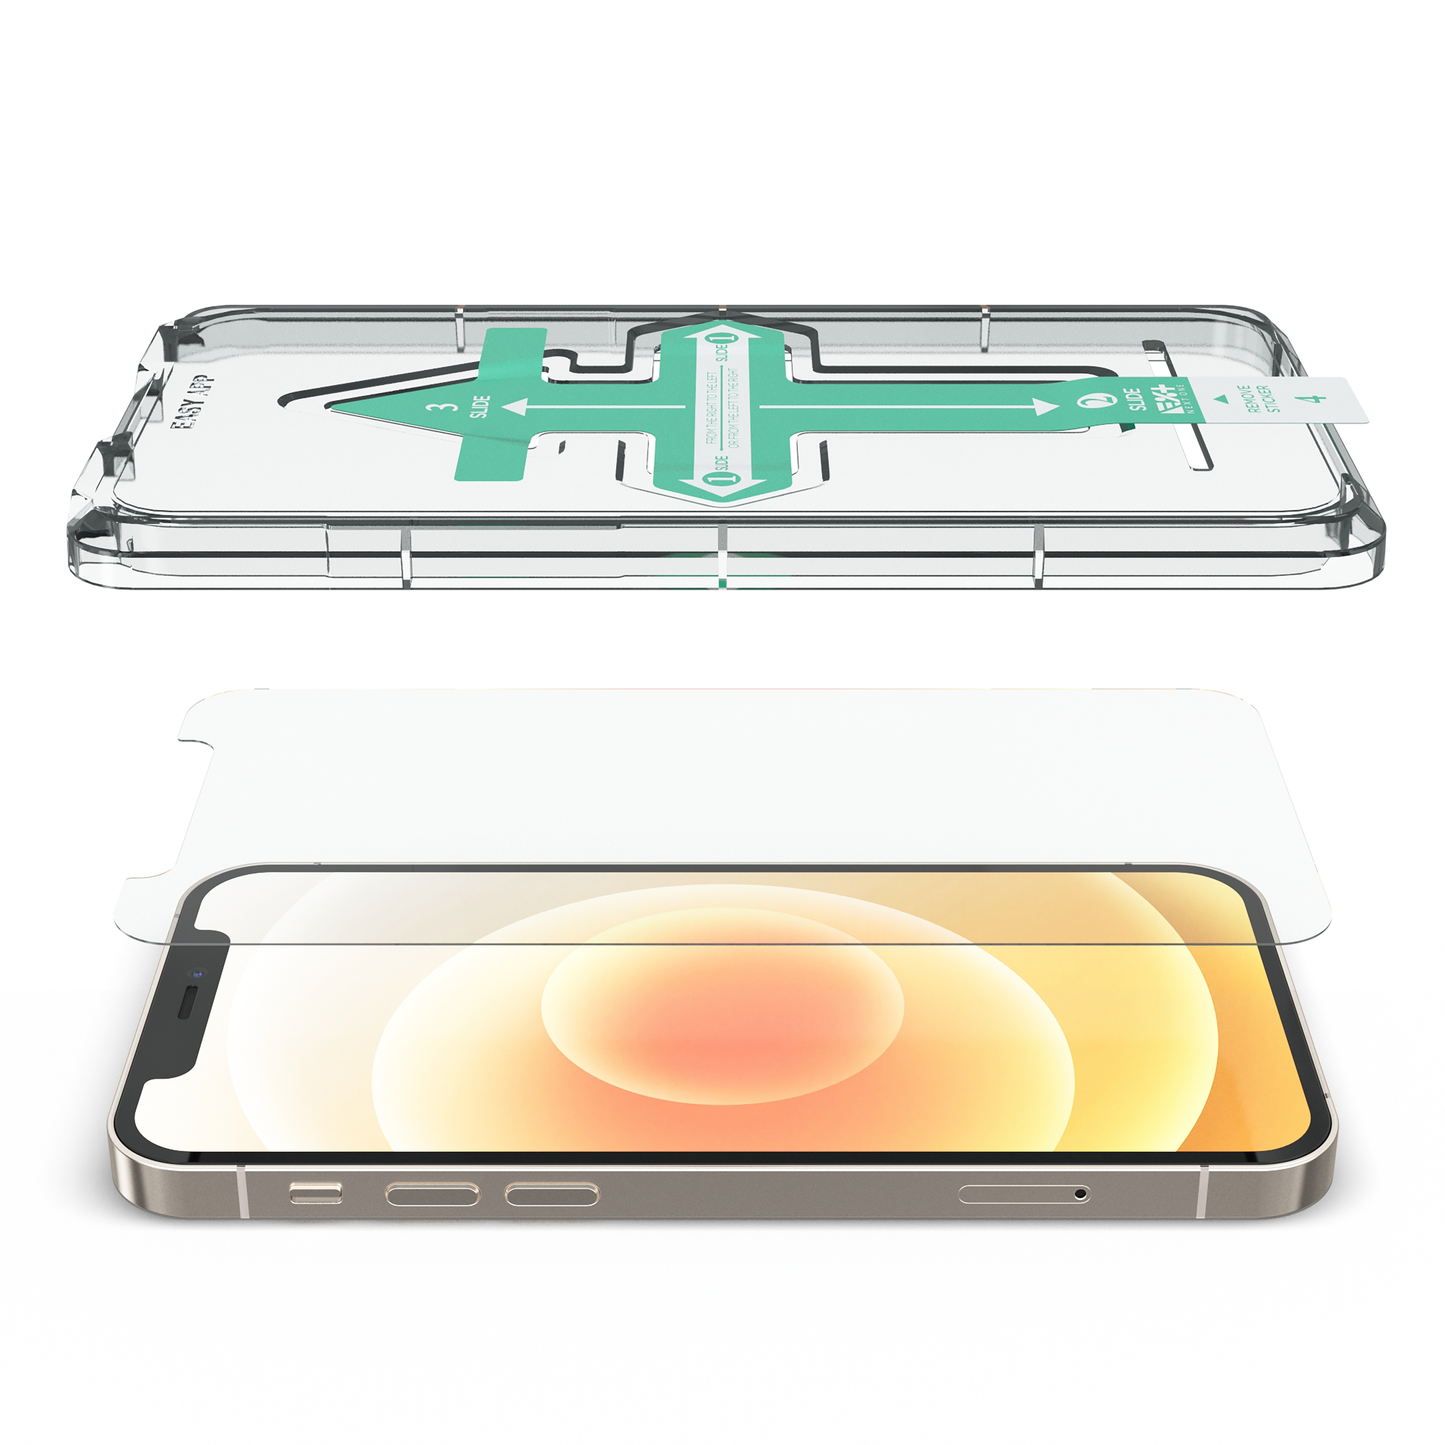 NEXT.ONE iPhone Tempered 2.5D Schutzglas mit Anbringhilfe - iPhone 12 Pro Max